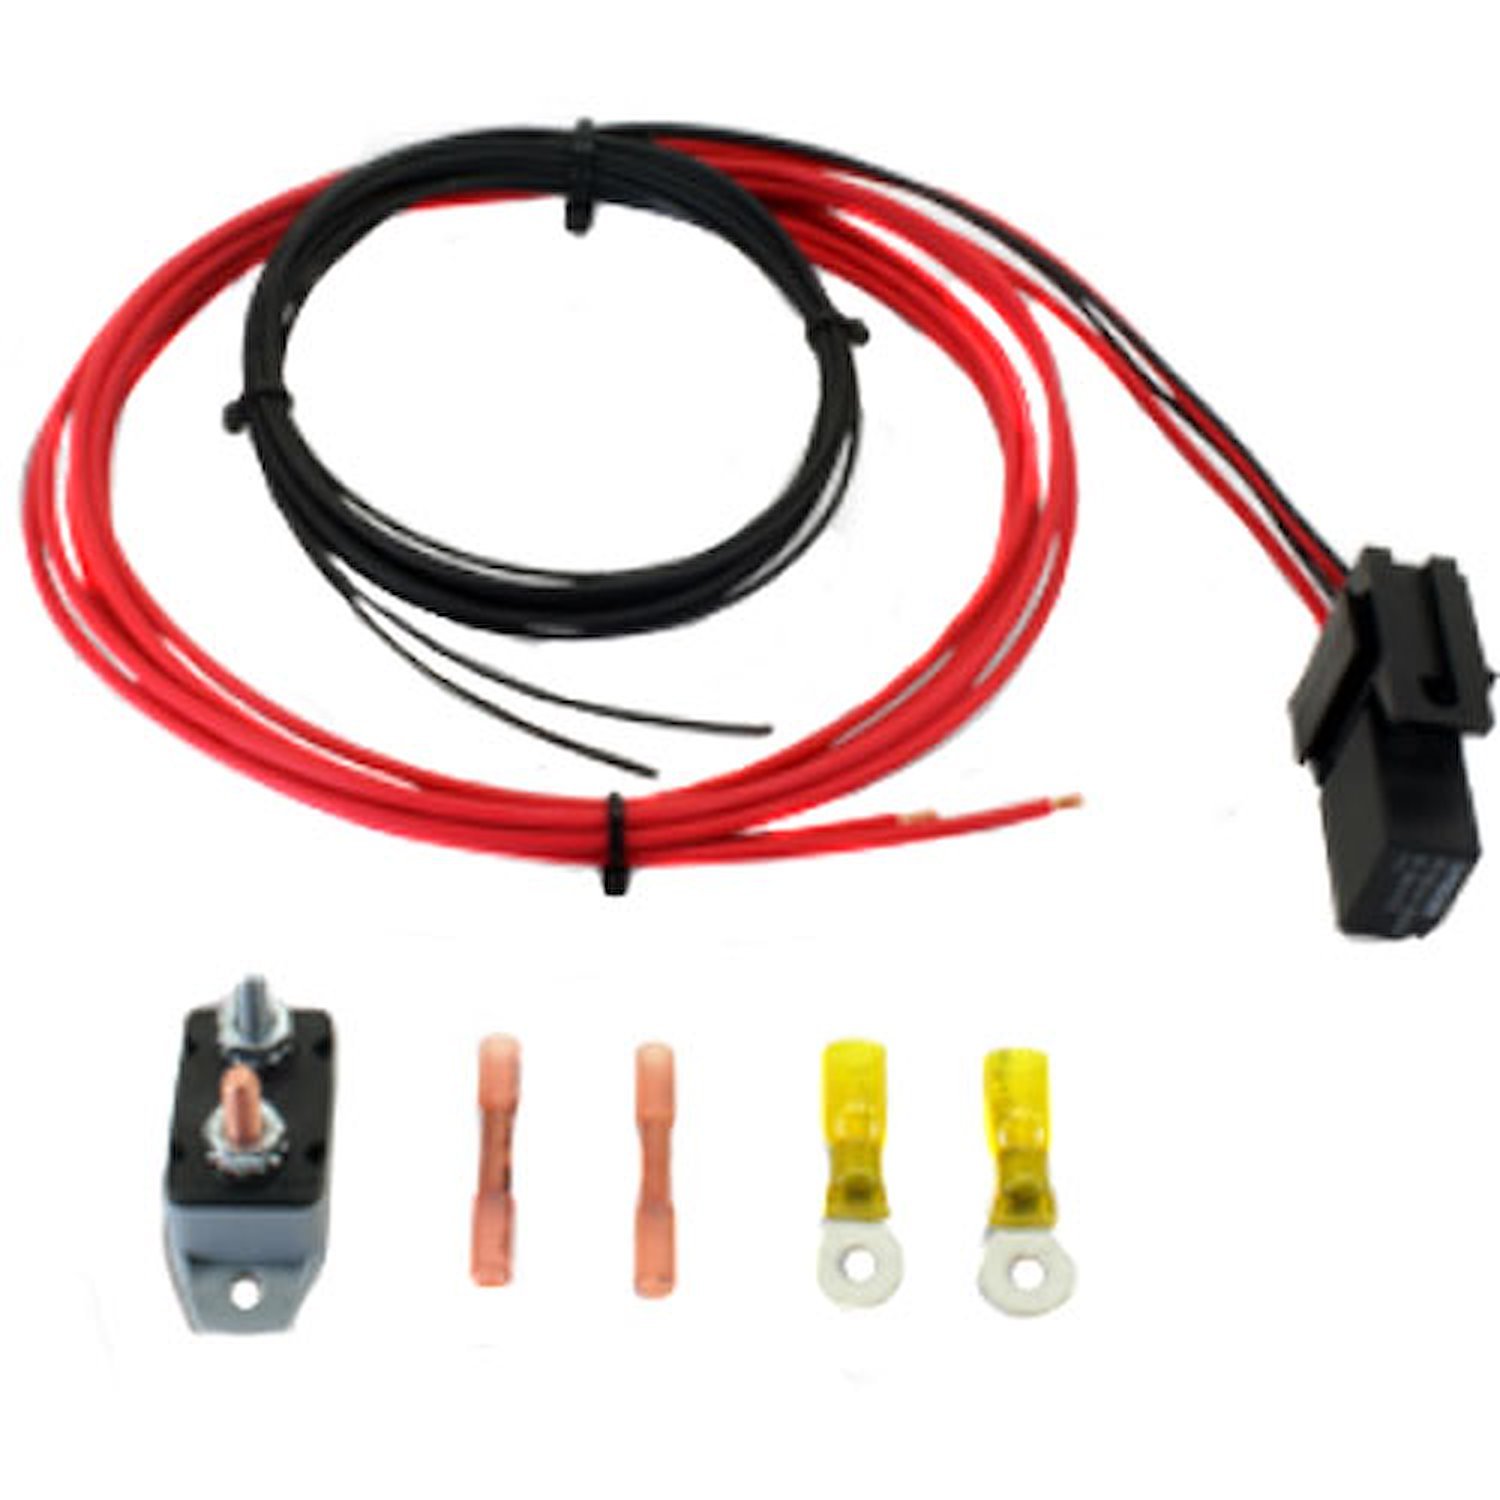 30 Amp Relay Wiring Kit Includes: 30 Amp Circuit Breaker